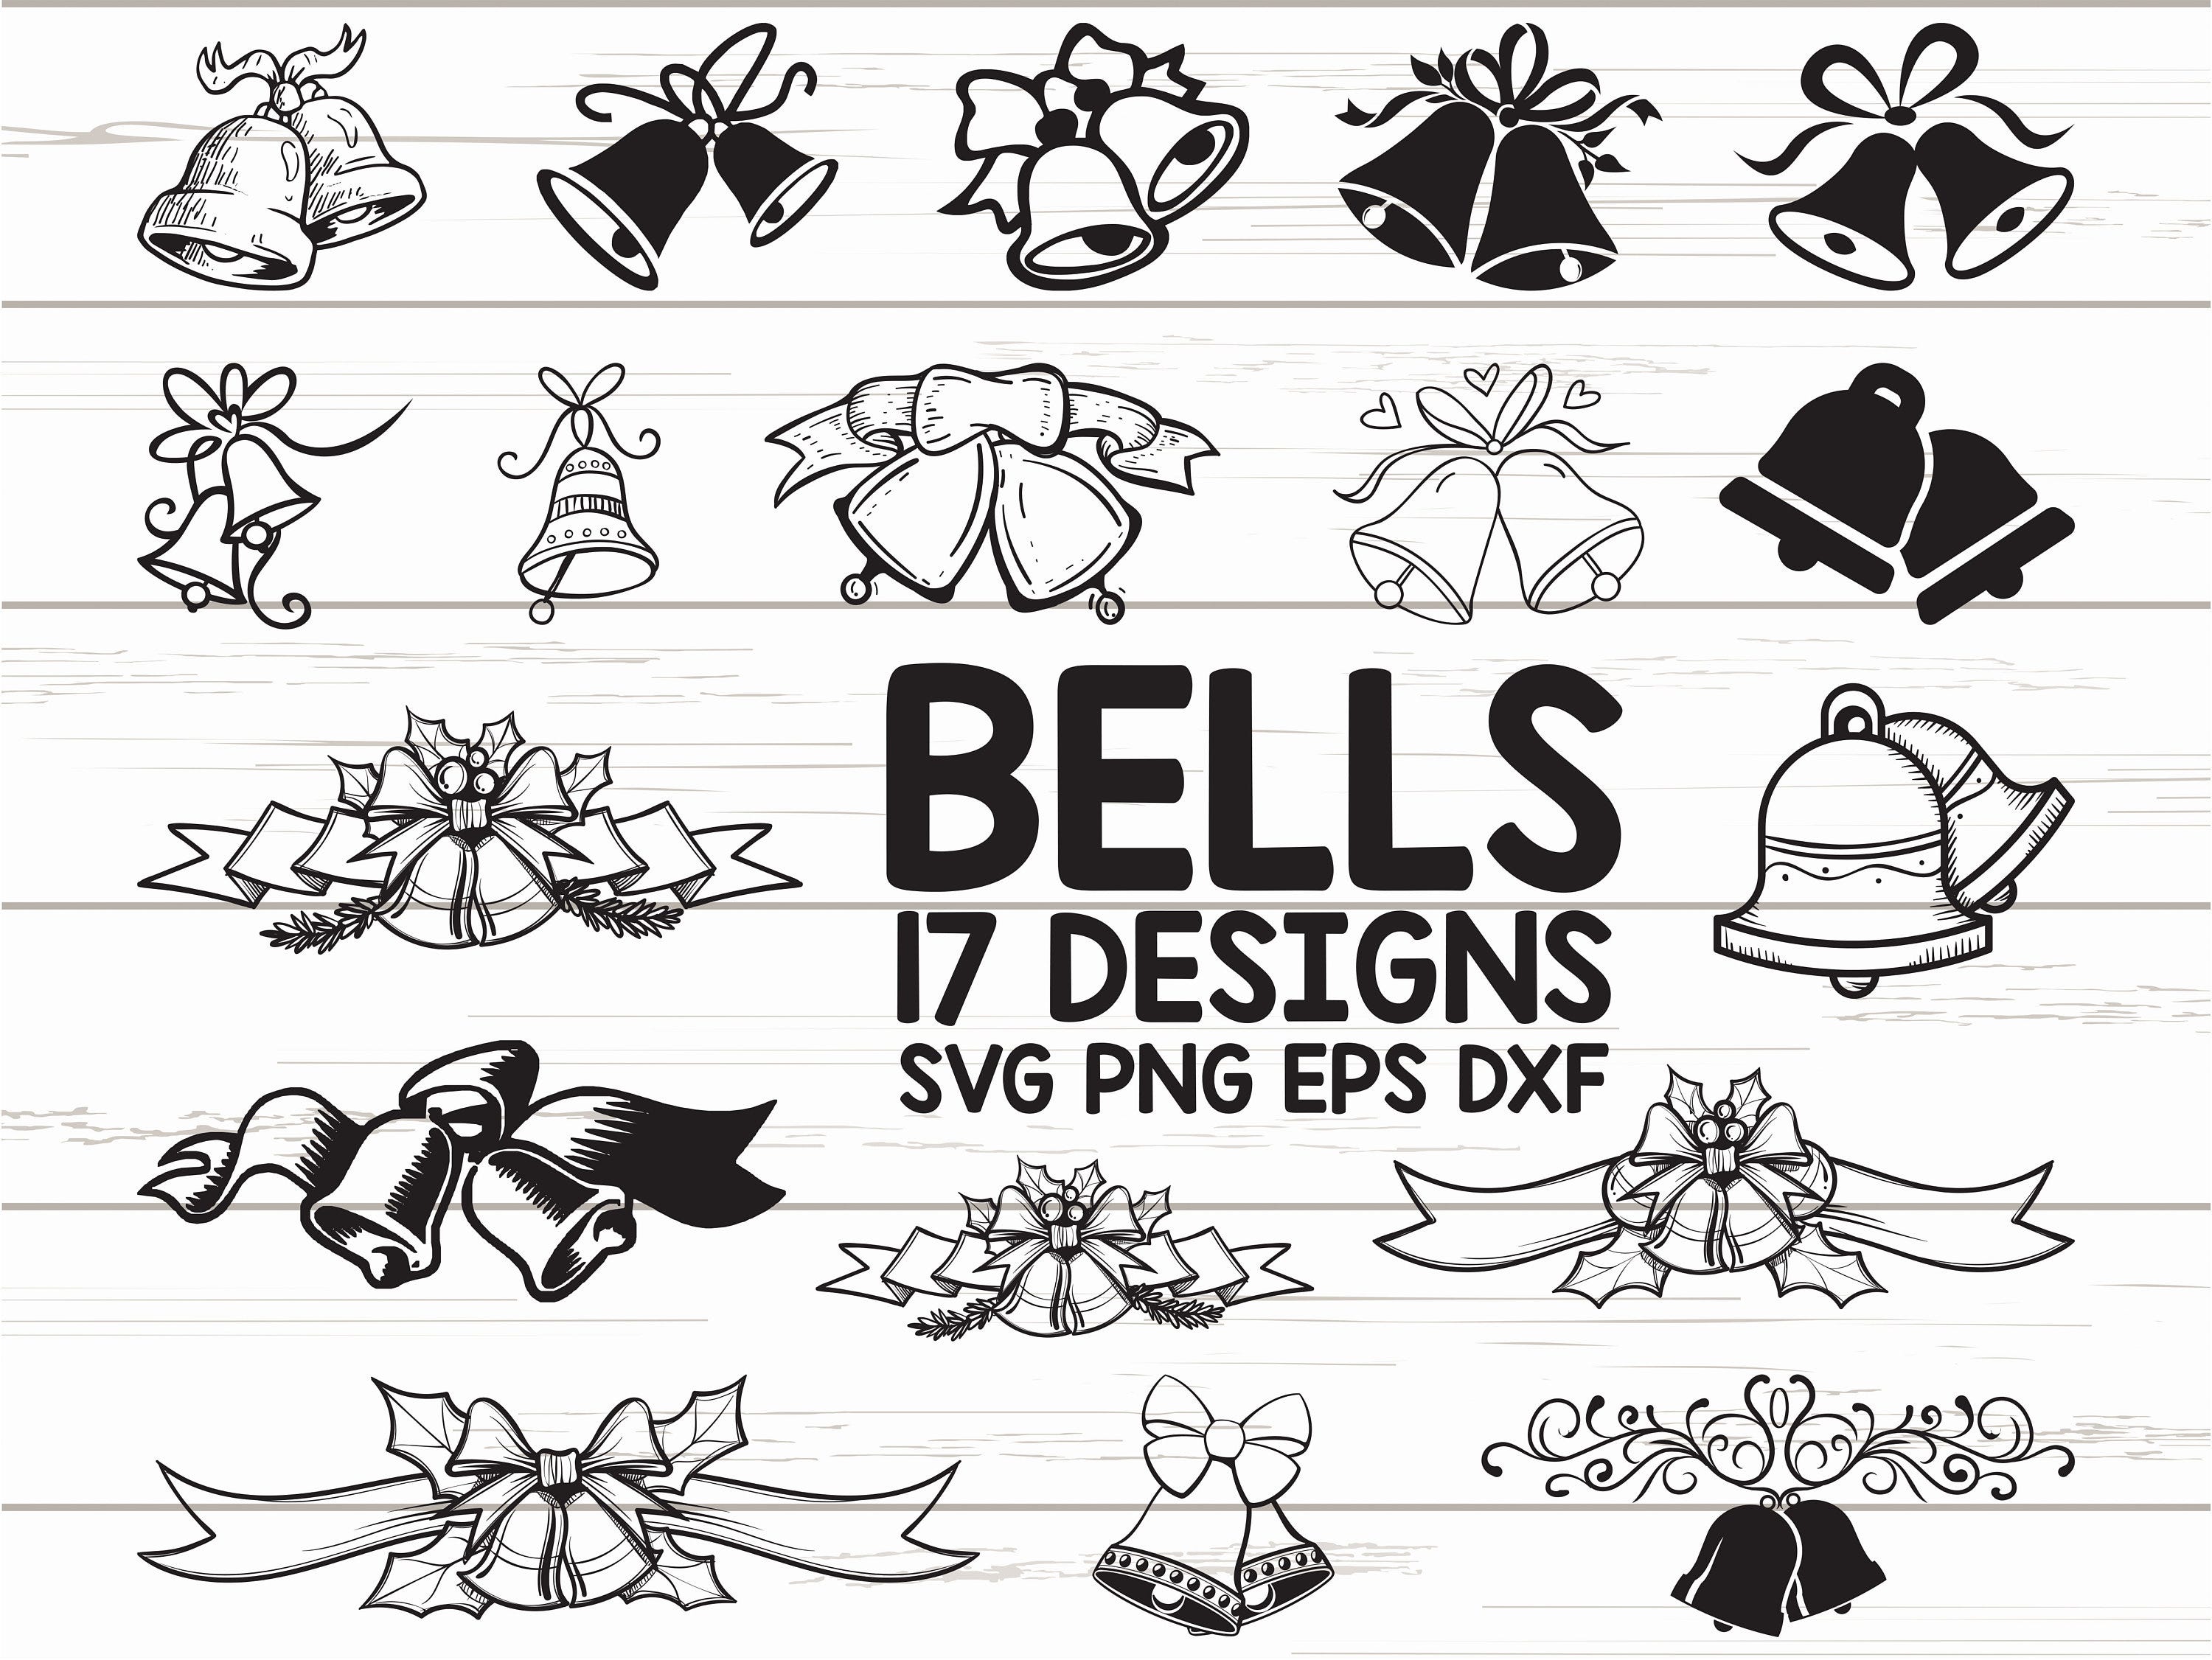 Bells SVG / Bell SVG / Bells Christmas / Wedding Bell SVG / Easter Svg / Clipart / Decal / Stencil / Vinyl / Cut file / Silhouette